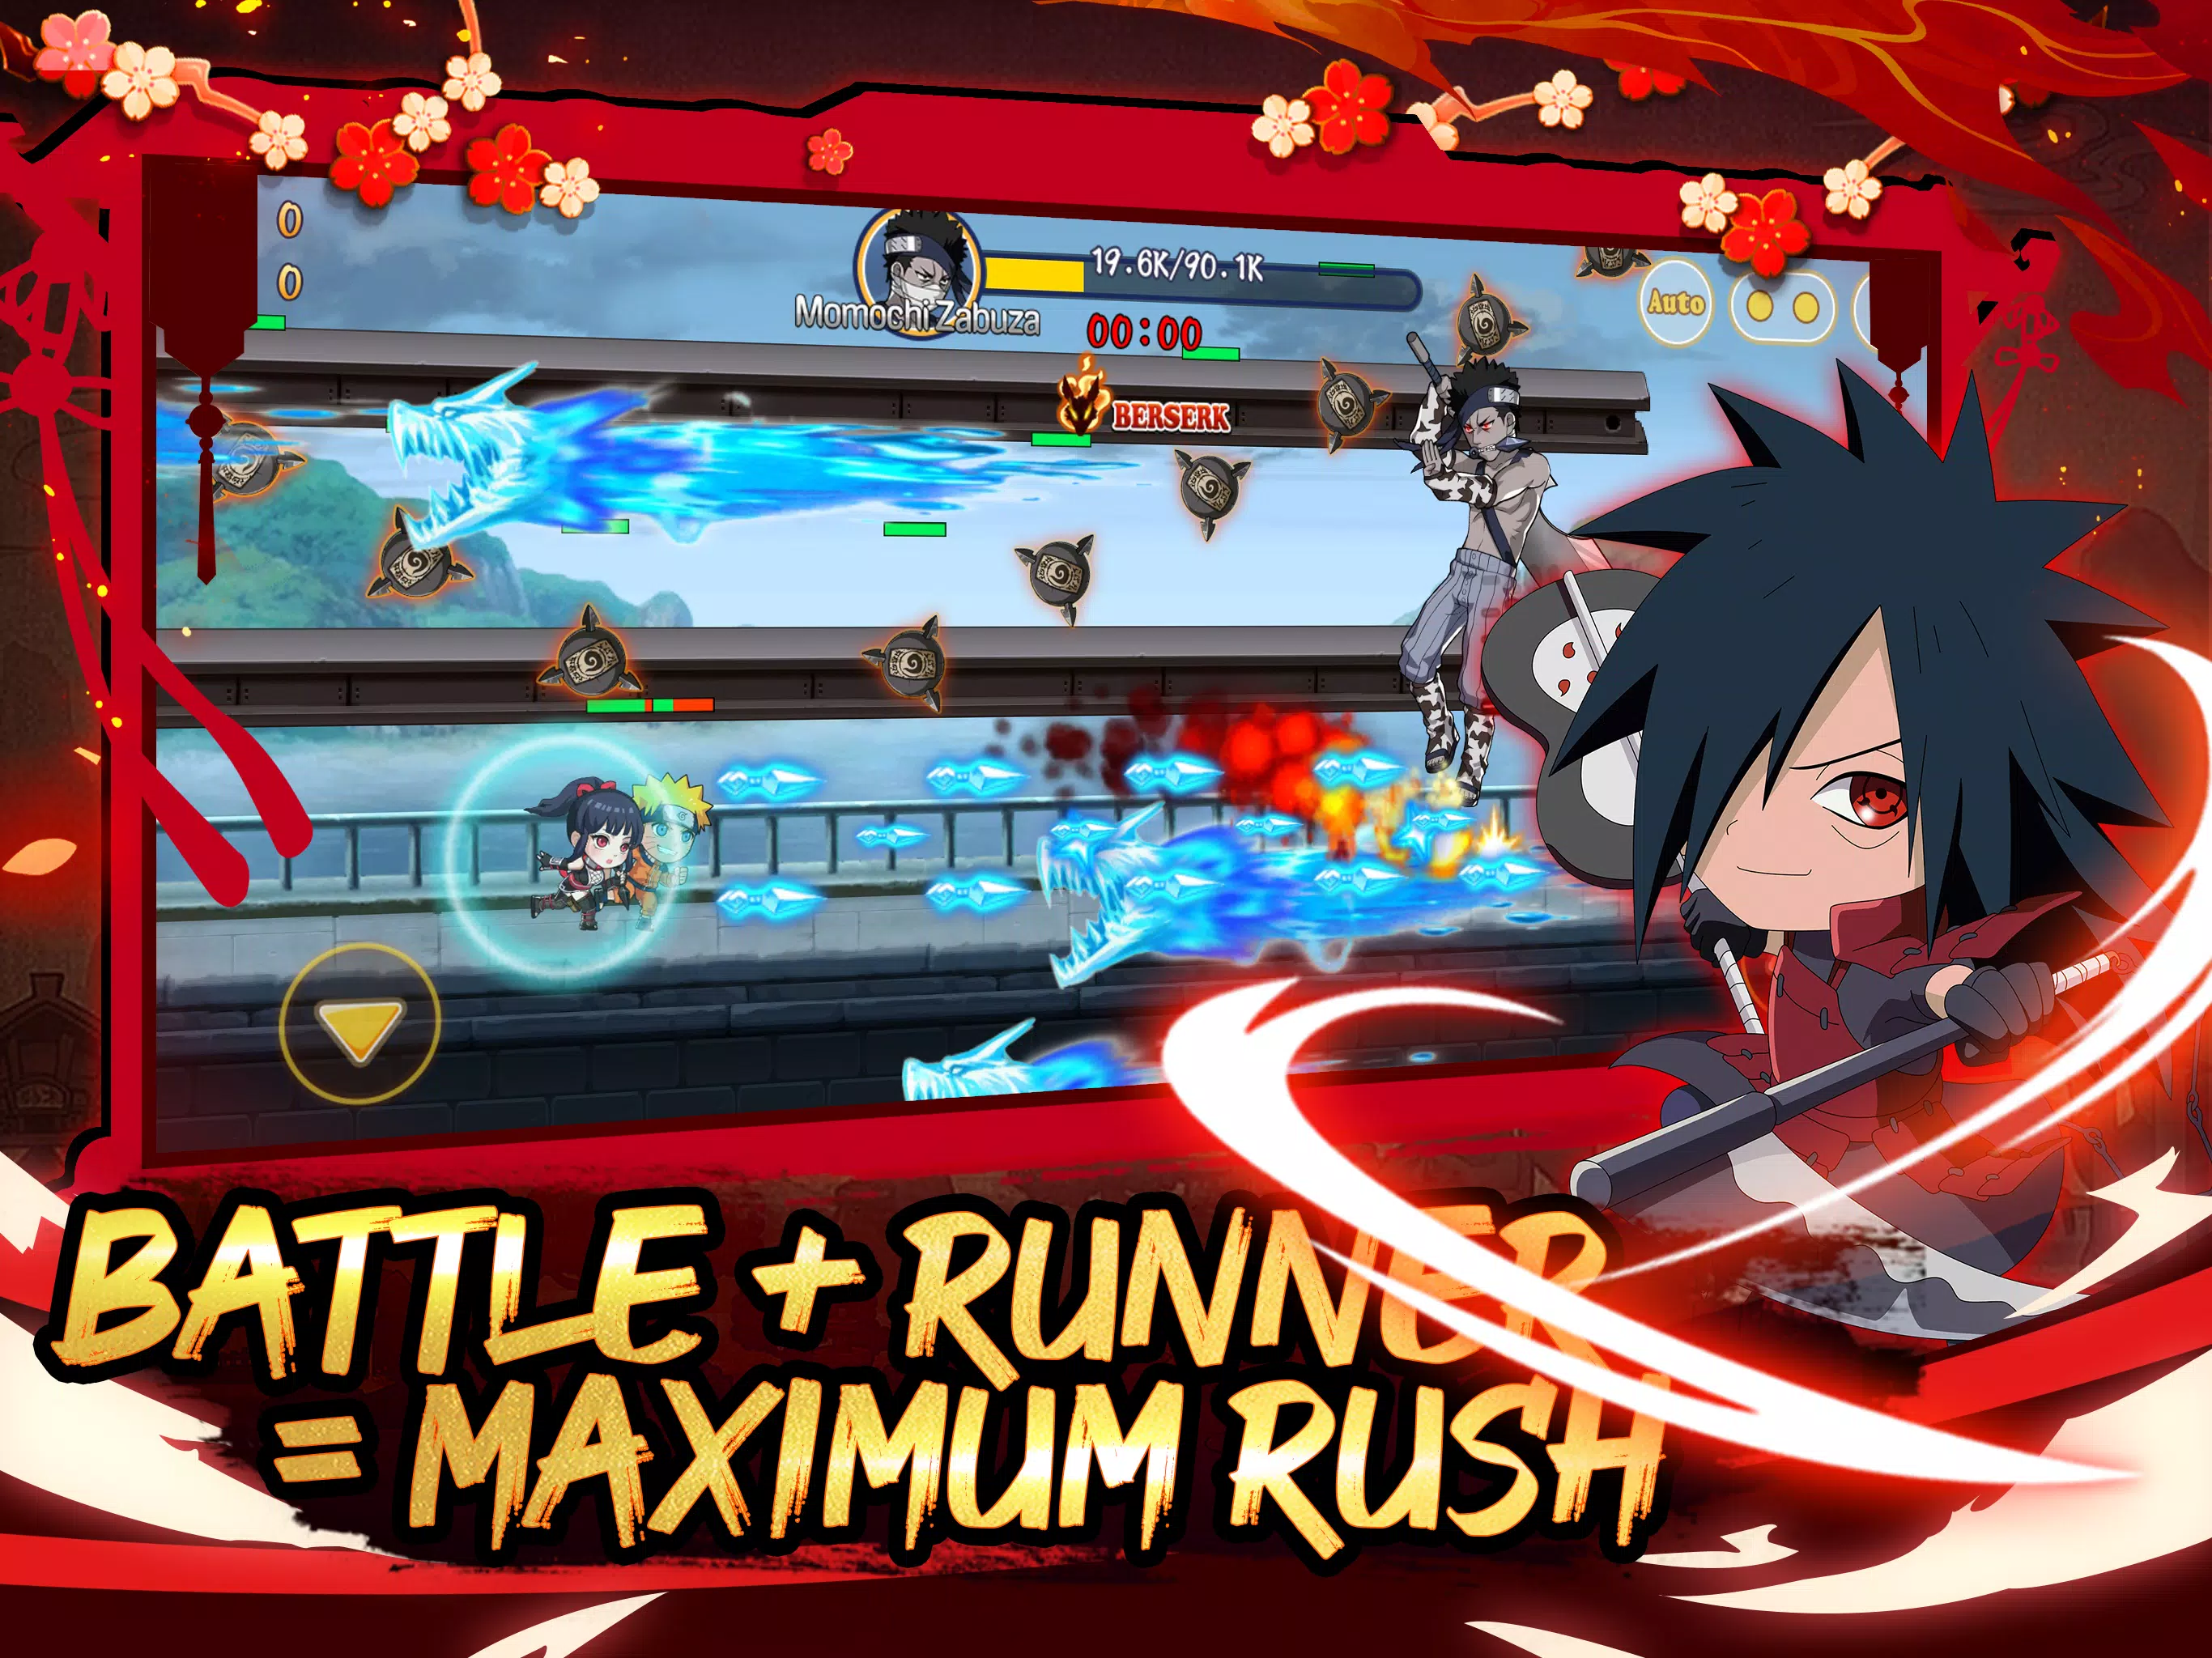 Download Ninja Run:Legendary Hero (MOD) APK for Android